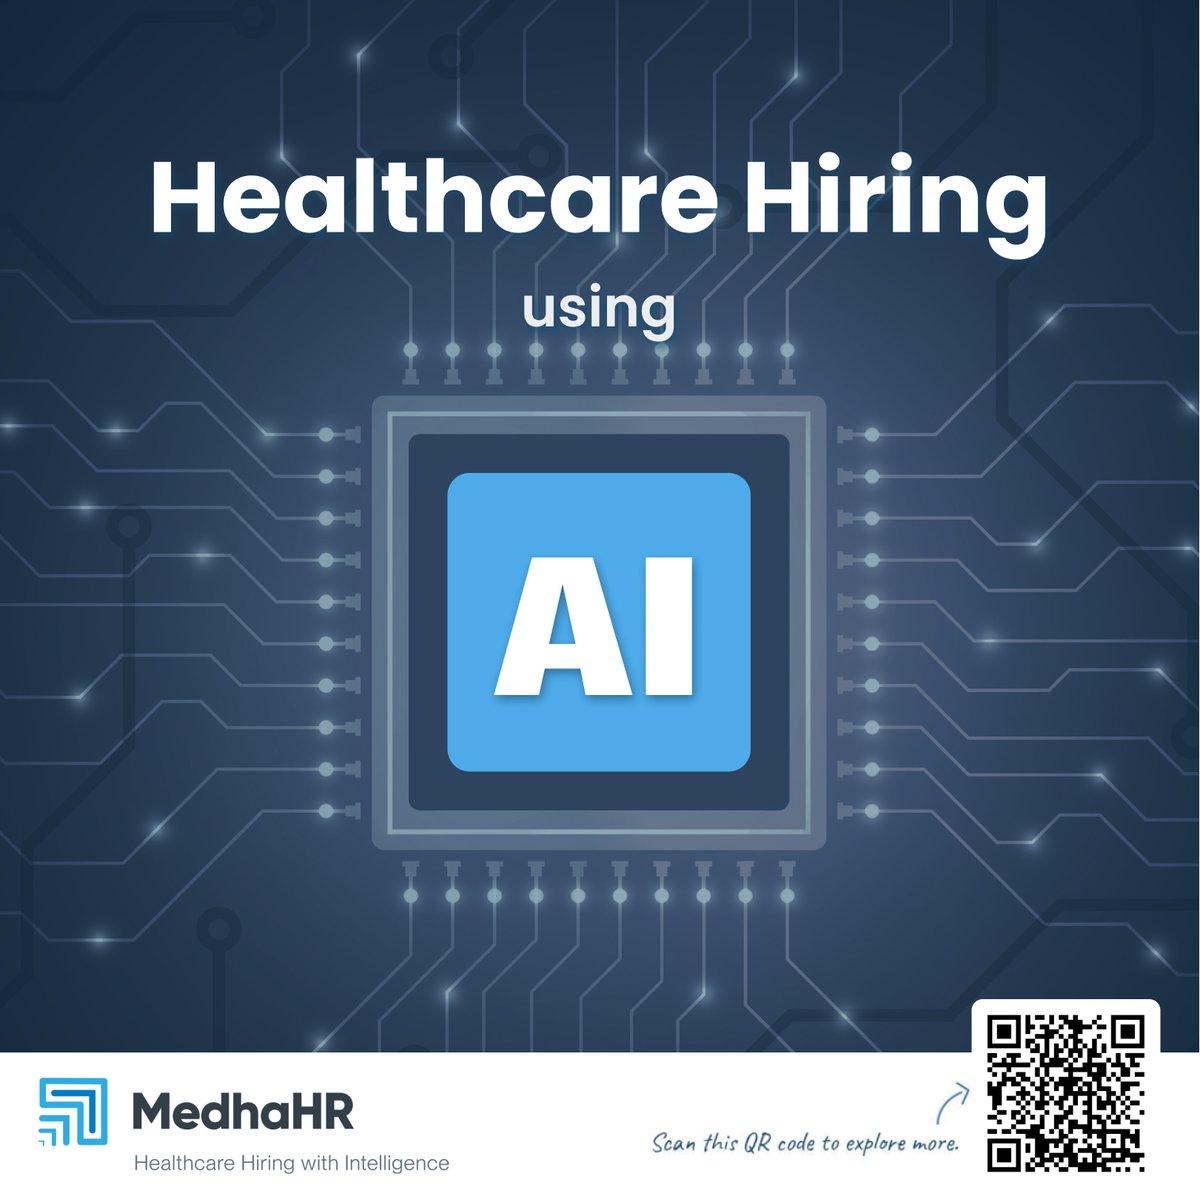 Explore how AI is revolutionizing Healthcare Recruitment!

bit.ly/3O6SUWM

#ai #healthcarerecruitment #MedhaHR #healthcarehiring #artificialintelligence #aiforgood #aiforall #aidriven #ml #aiml #healthcare